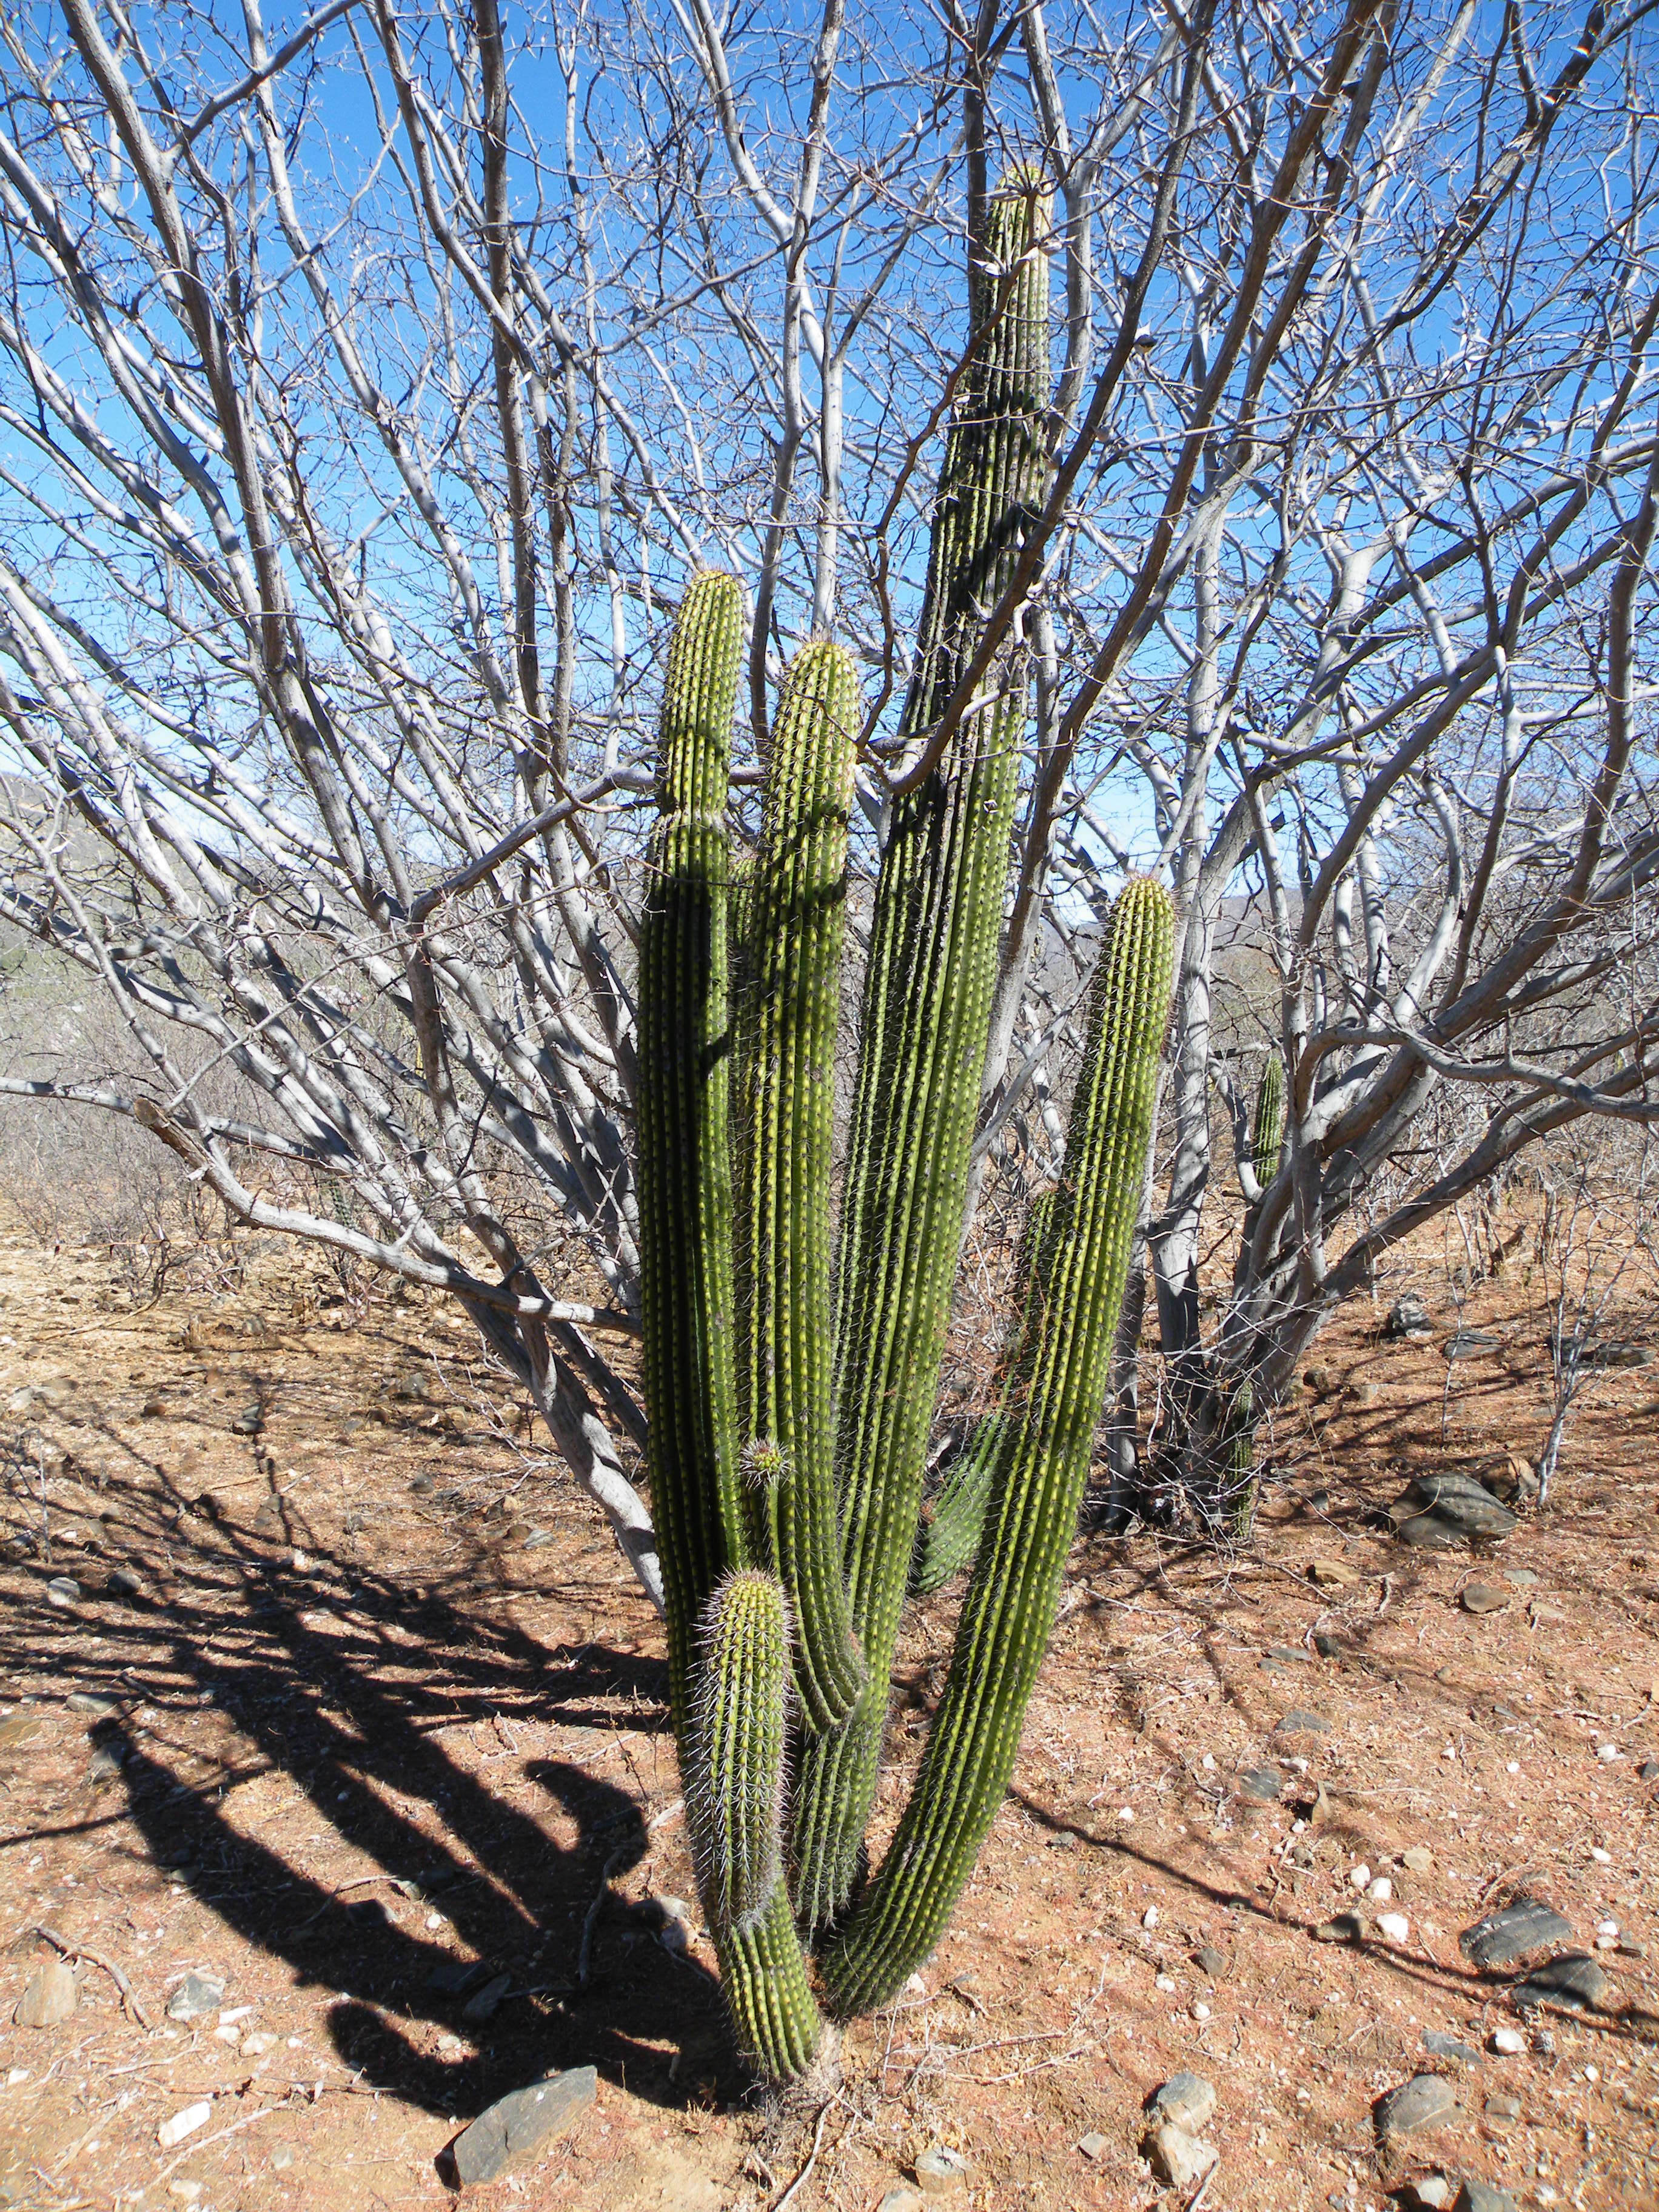 Image of Organ Pipe Cactus